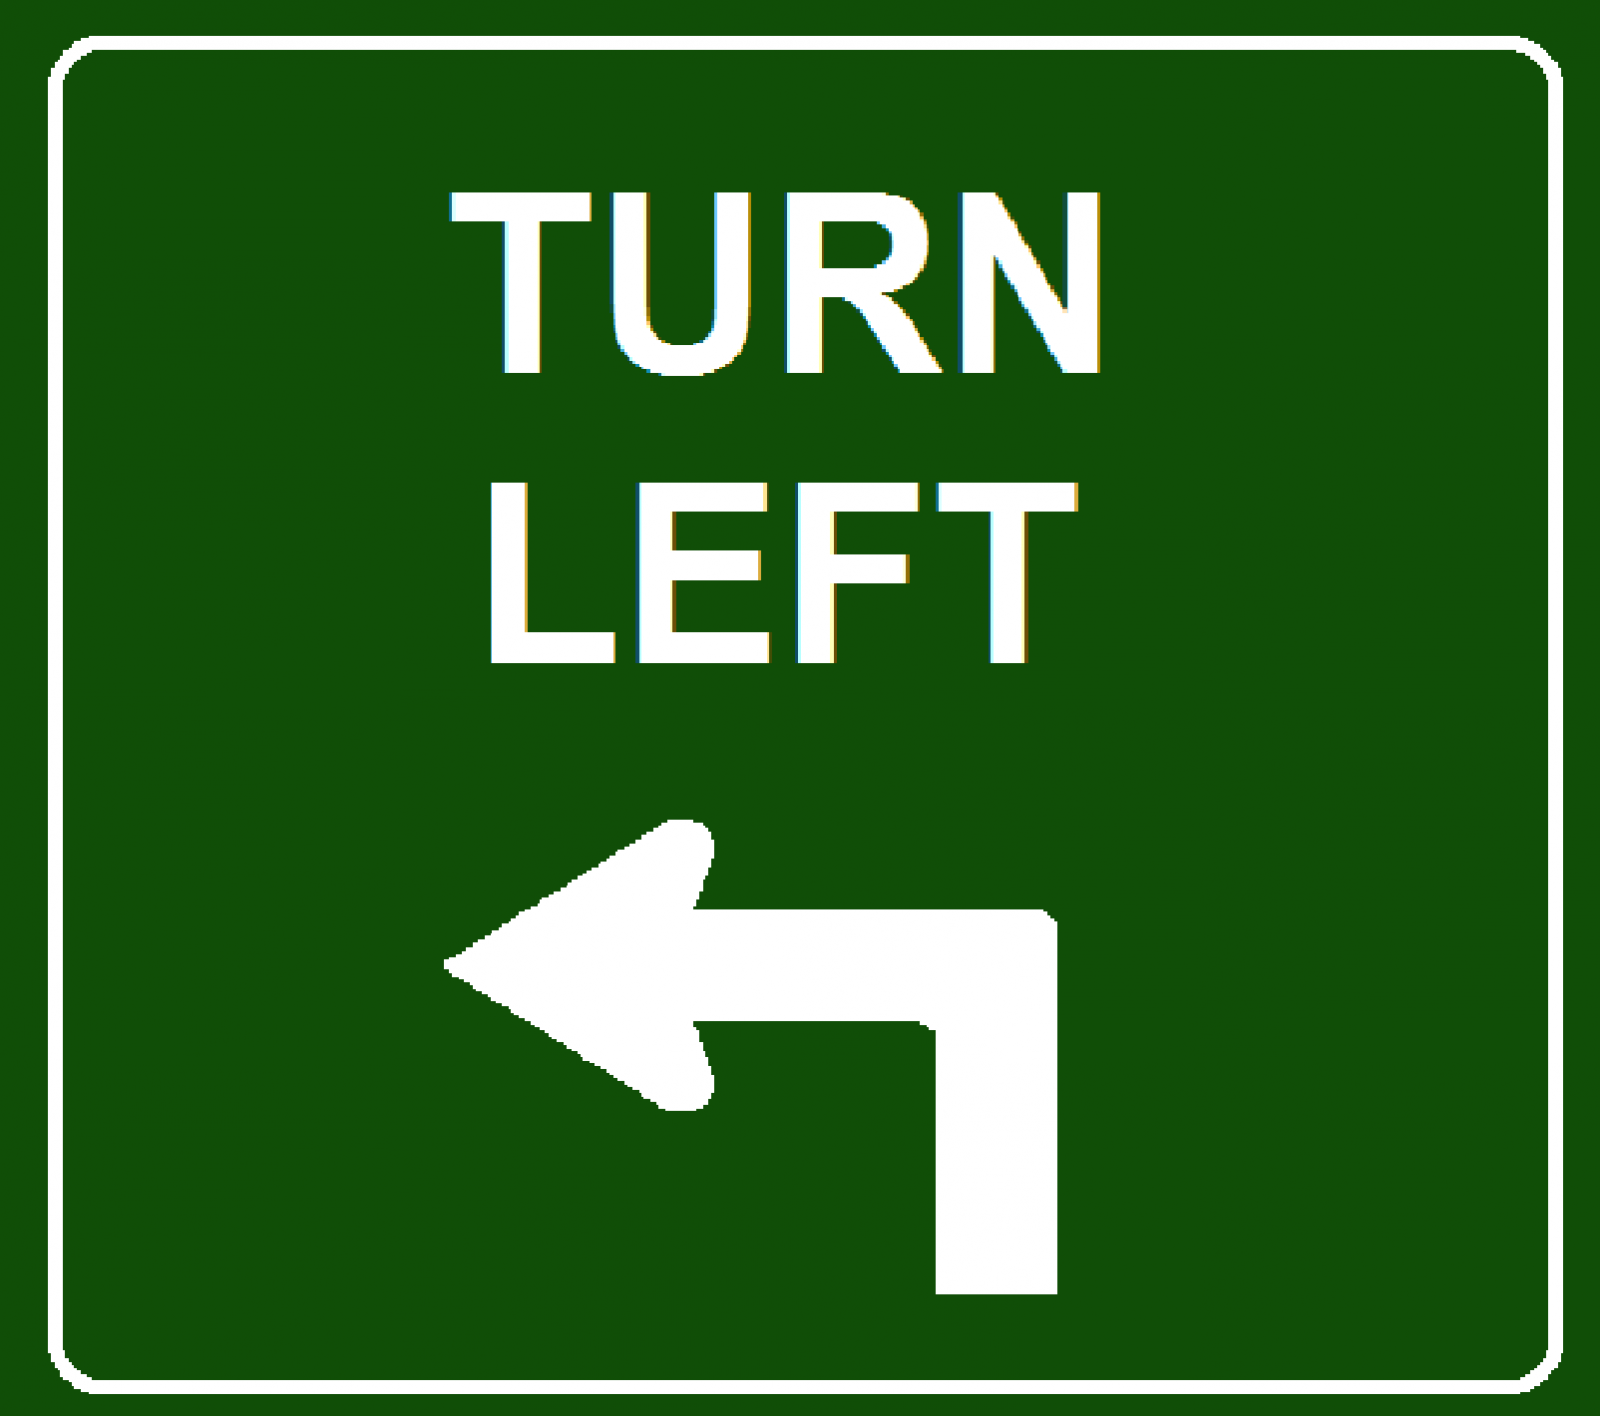 Turn left. Turn left картинка. Turn left turn right. Реклама turn turn turn turn. Good left good right